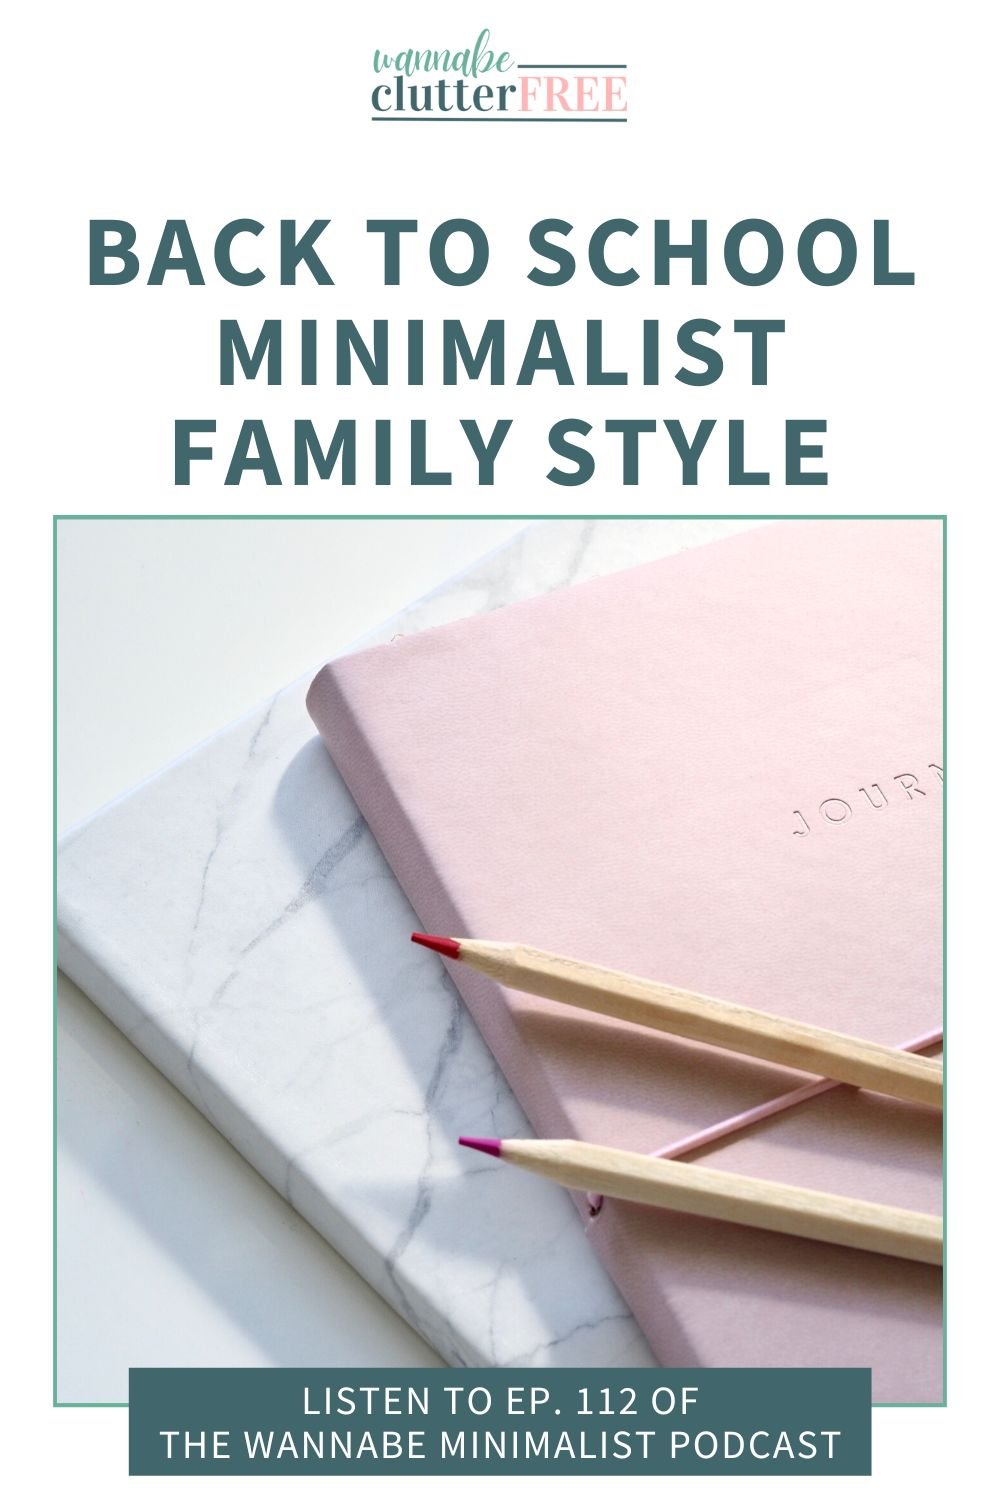 Back to school minimalist family style